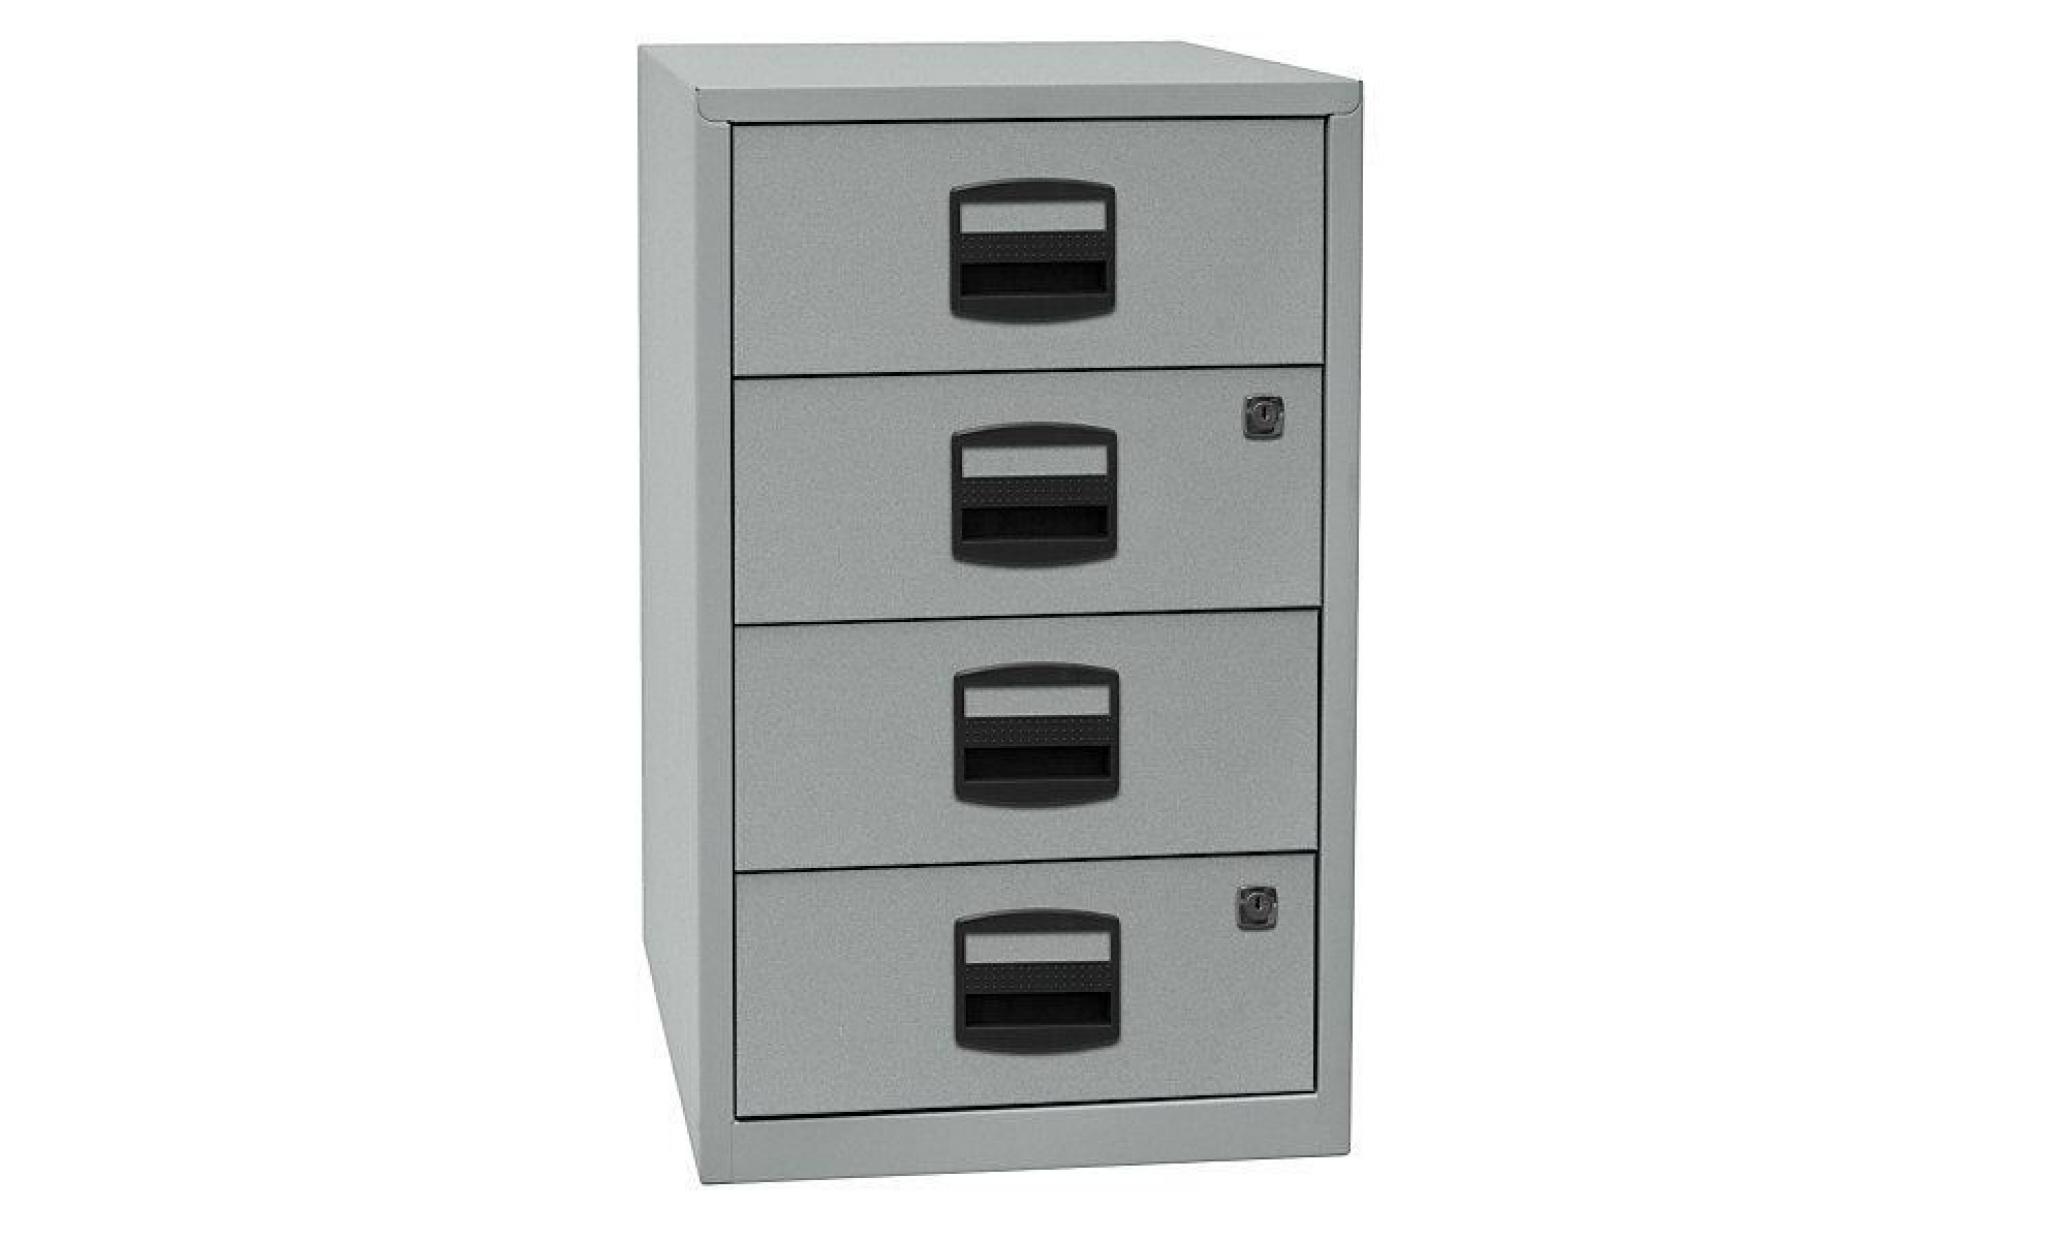 armoire hauteur bureau pfa   4 tiroirs universels gris clair / bleu oxford   armoire basse armoire de bureau armoire à tiroirs